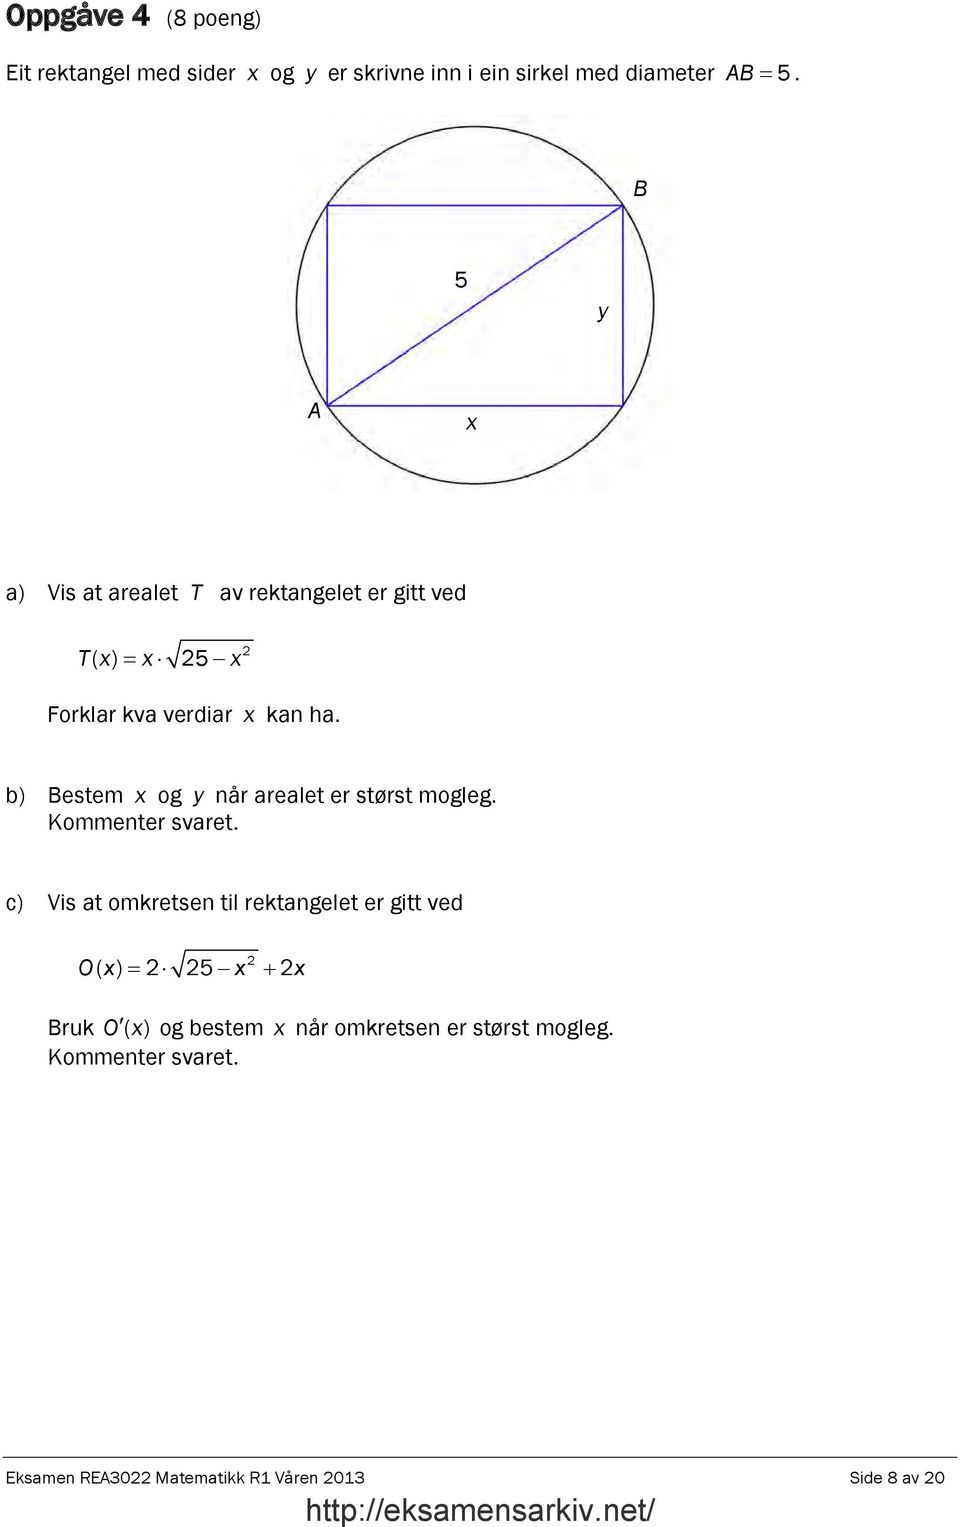 b) Bestem x og y når arealet er størst mogleg. Kommenter svaret.